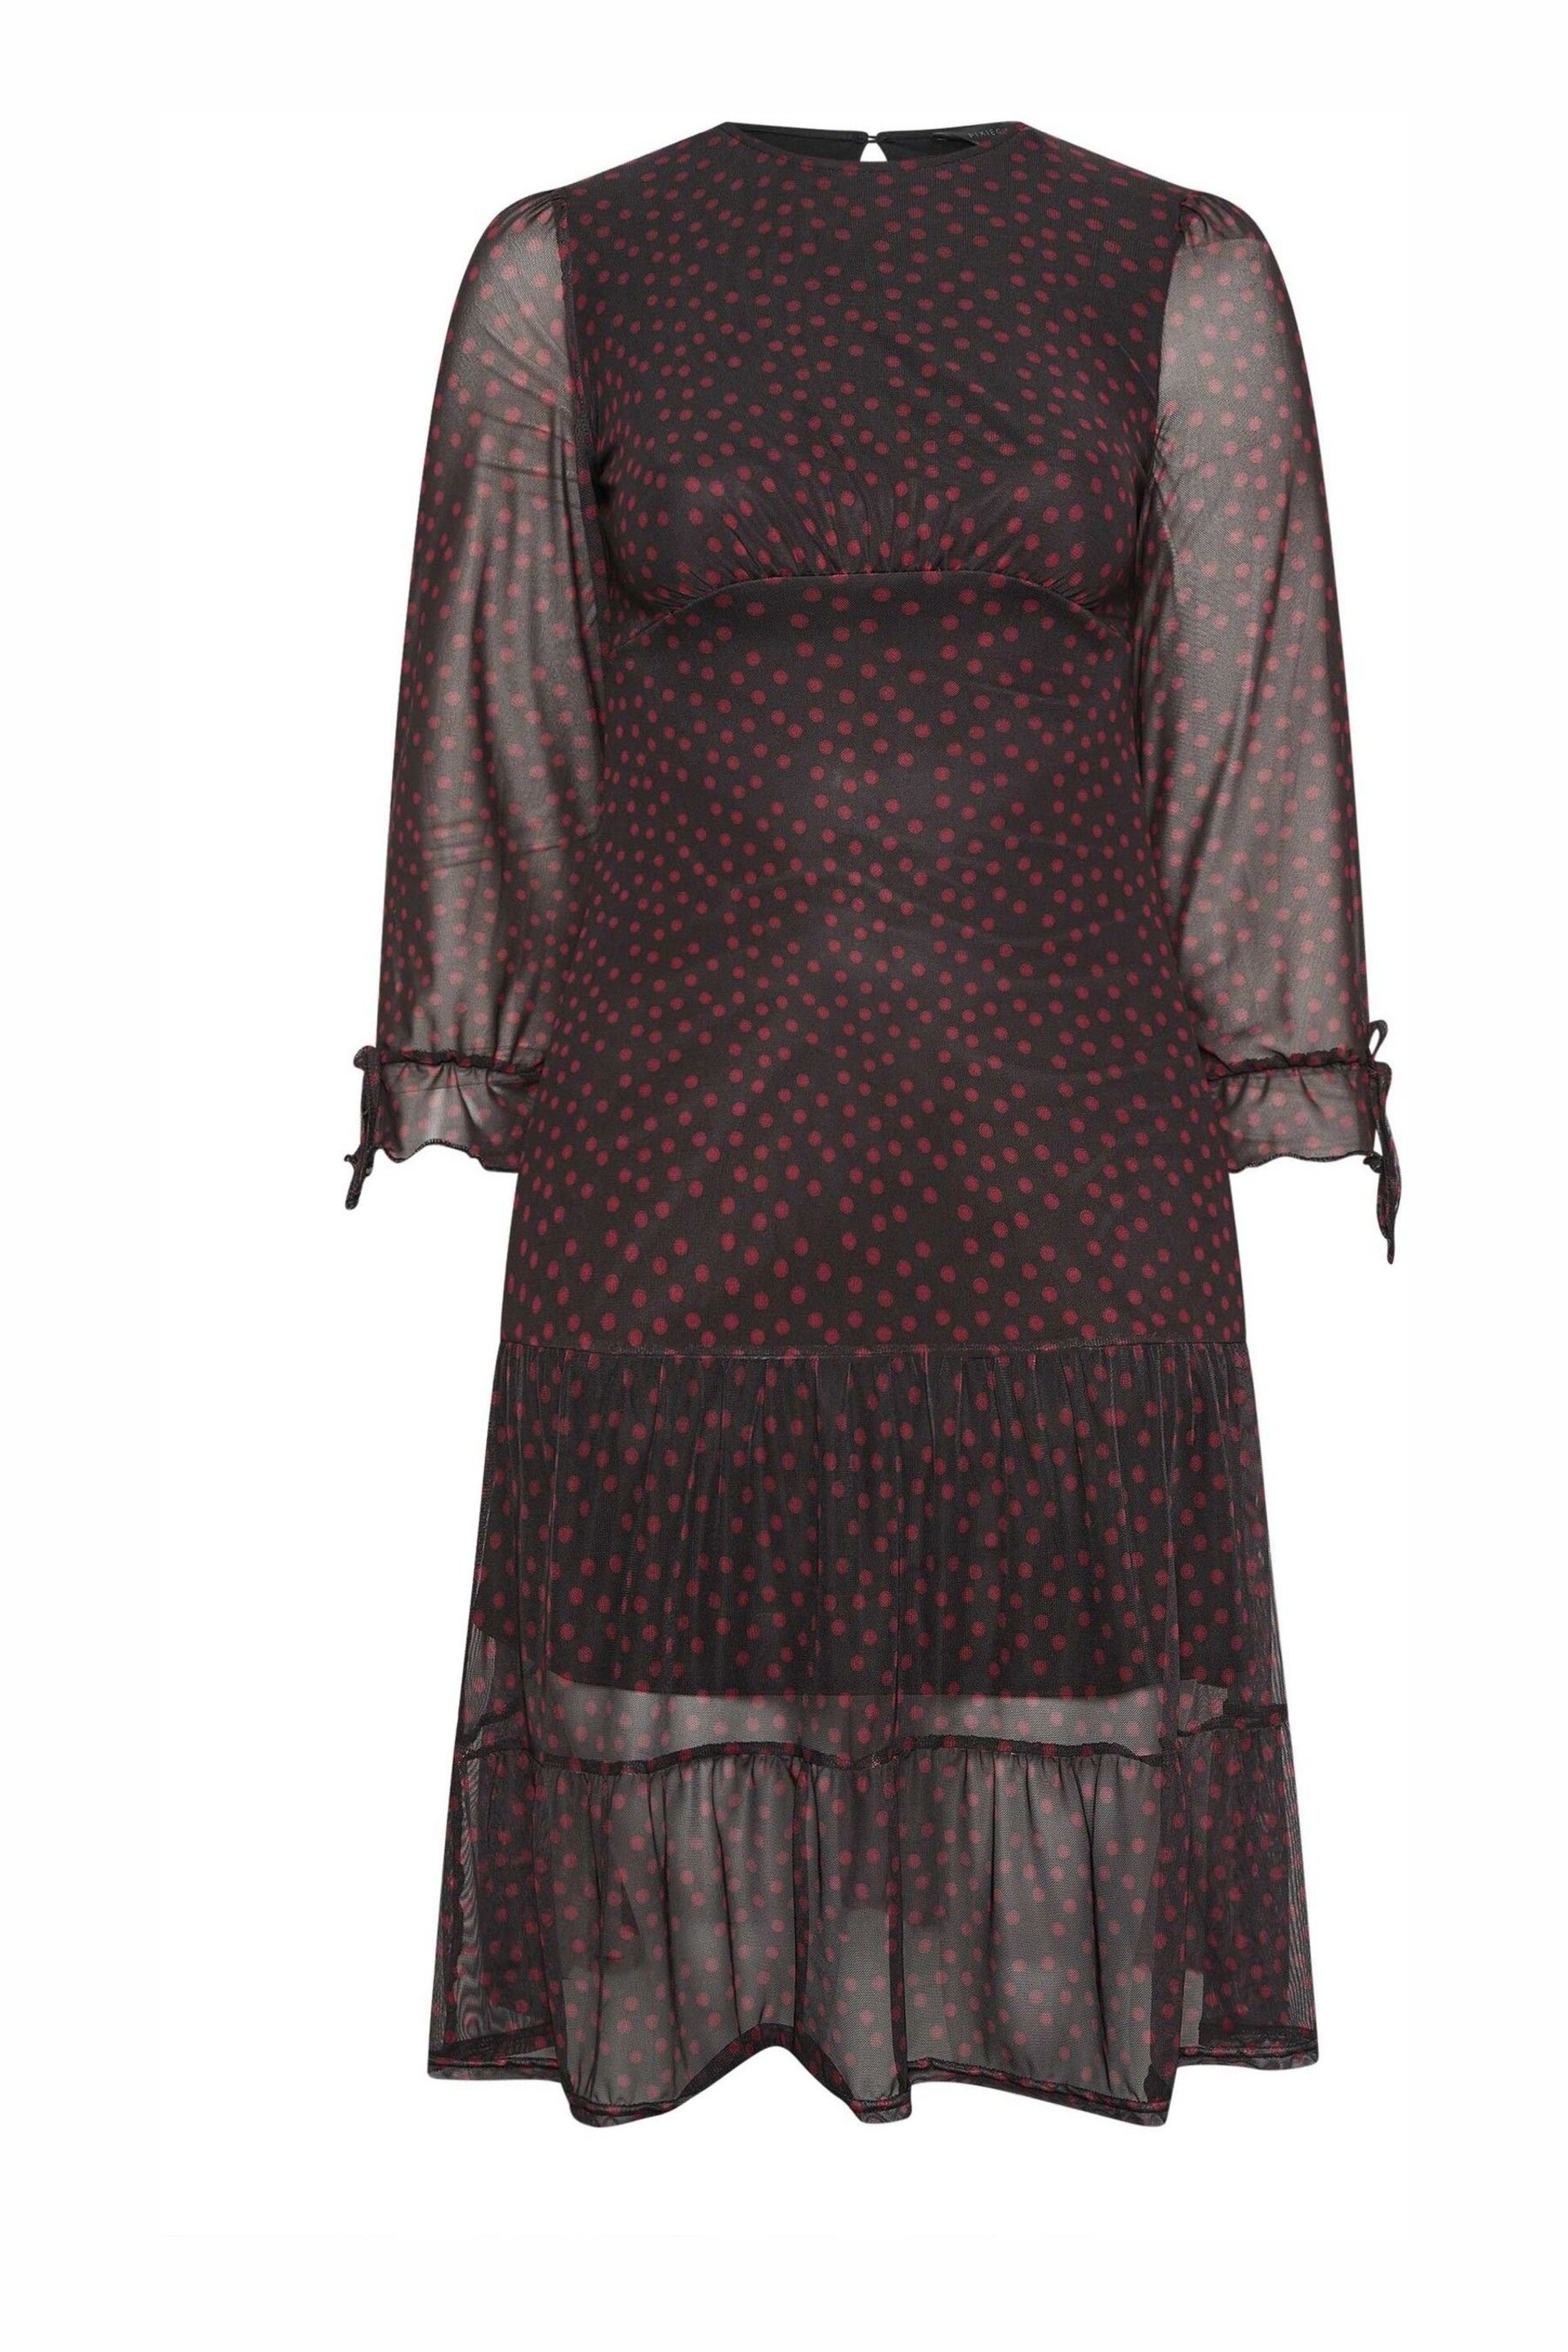 PixieGirl Petite Black Longsleeve Mesh Midaxi Dress - Image 5 of 5